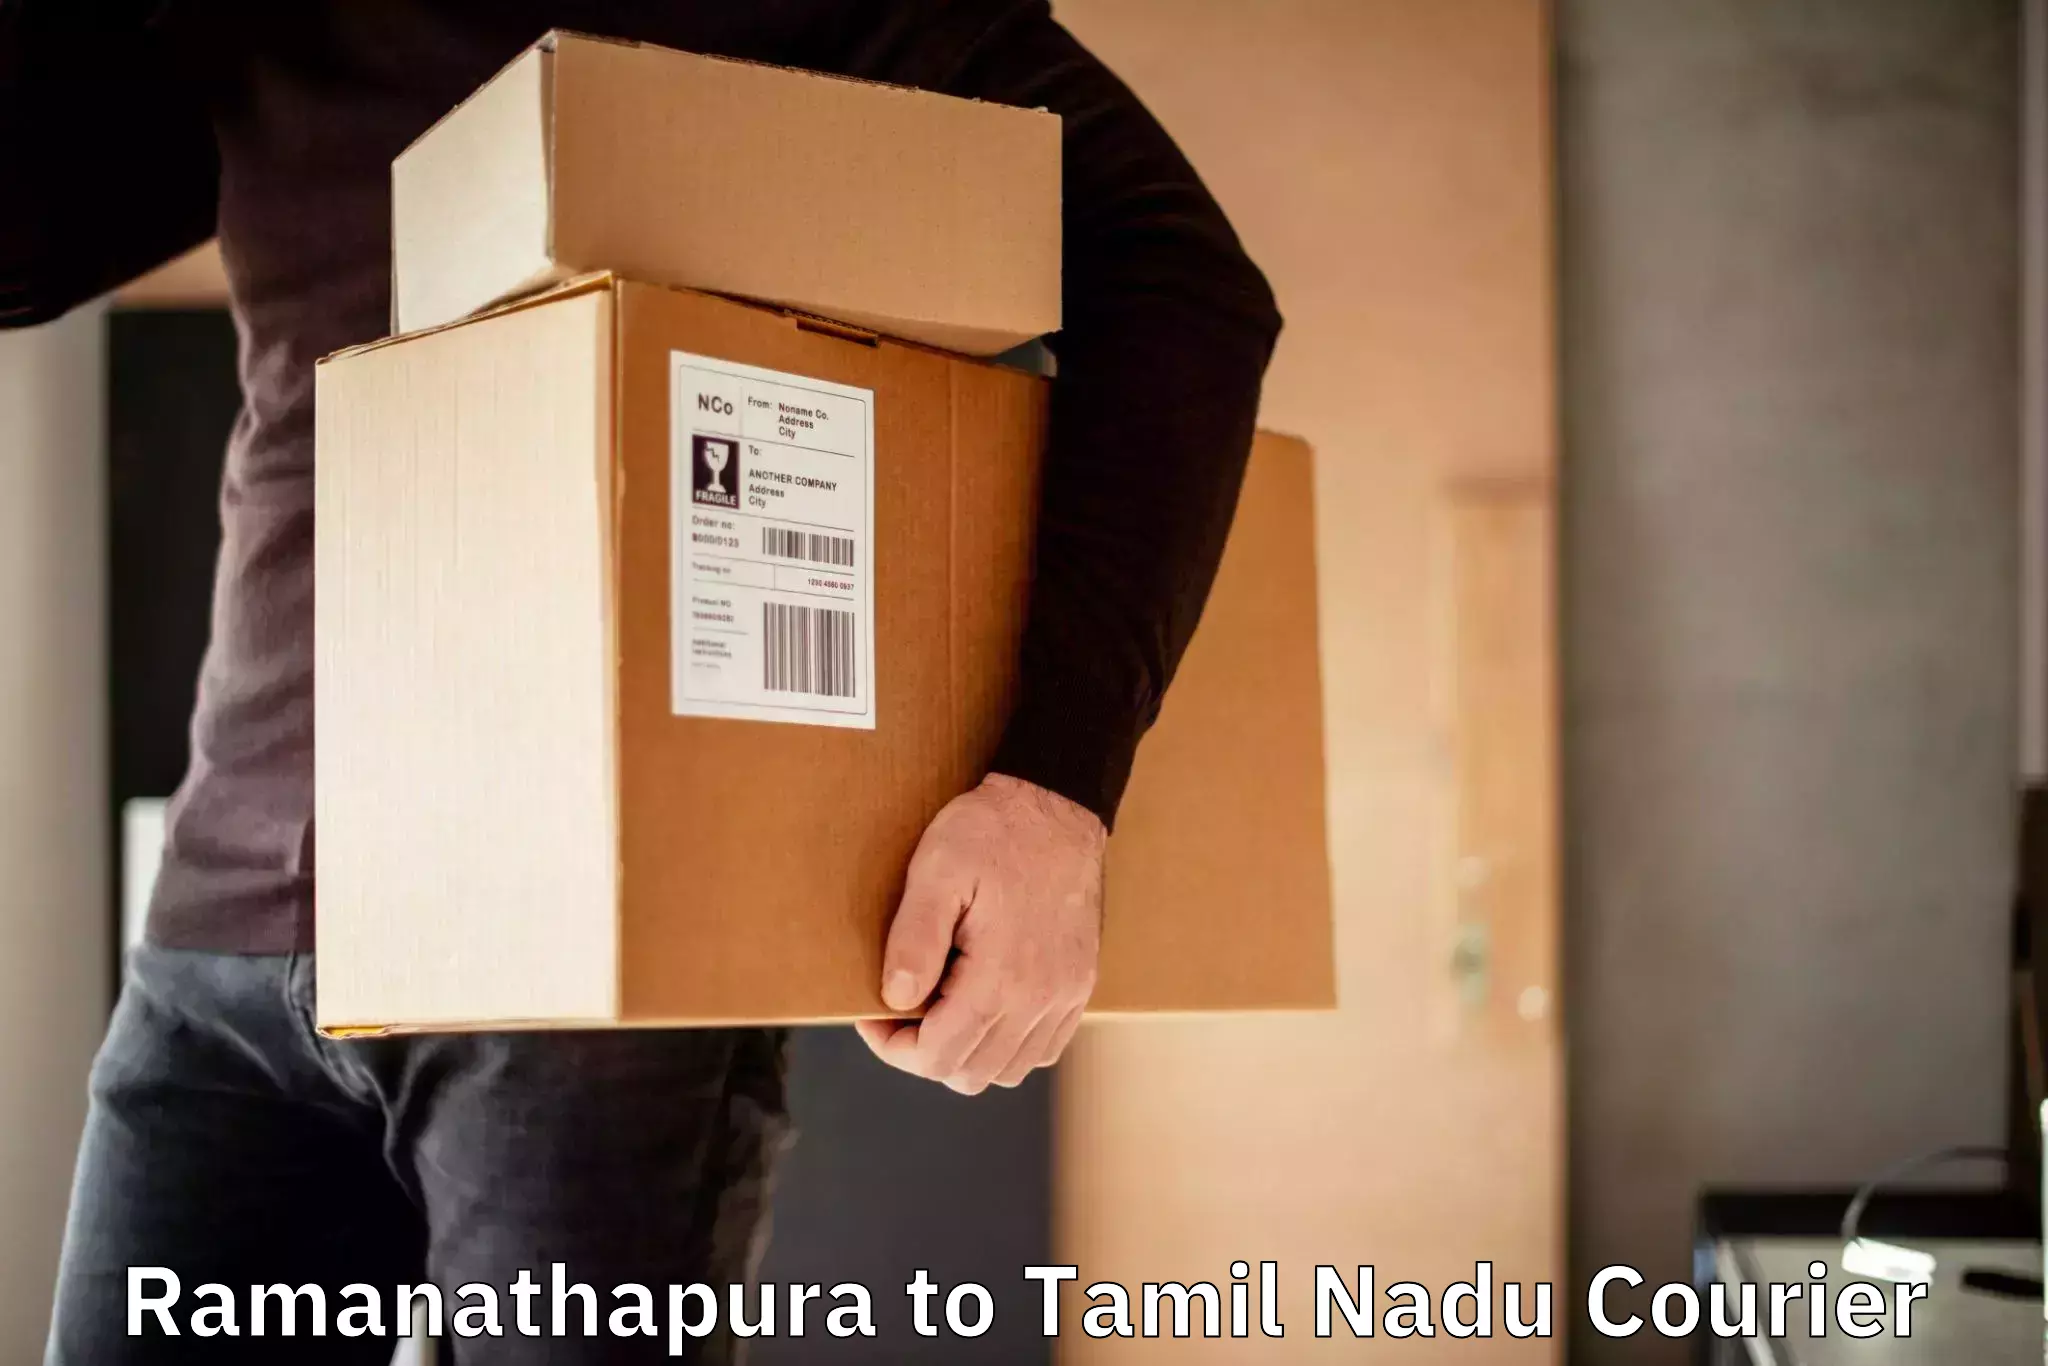 24-hour delivery options Ramanathapura to Coimbatore